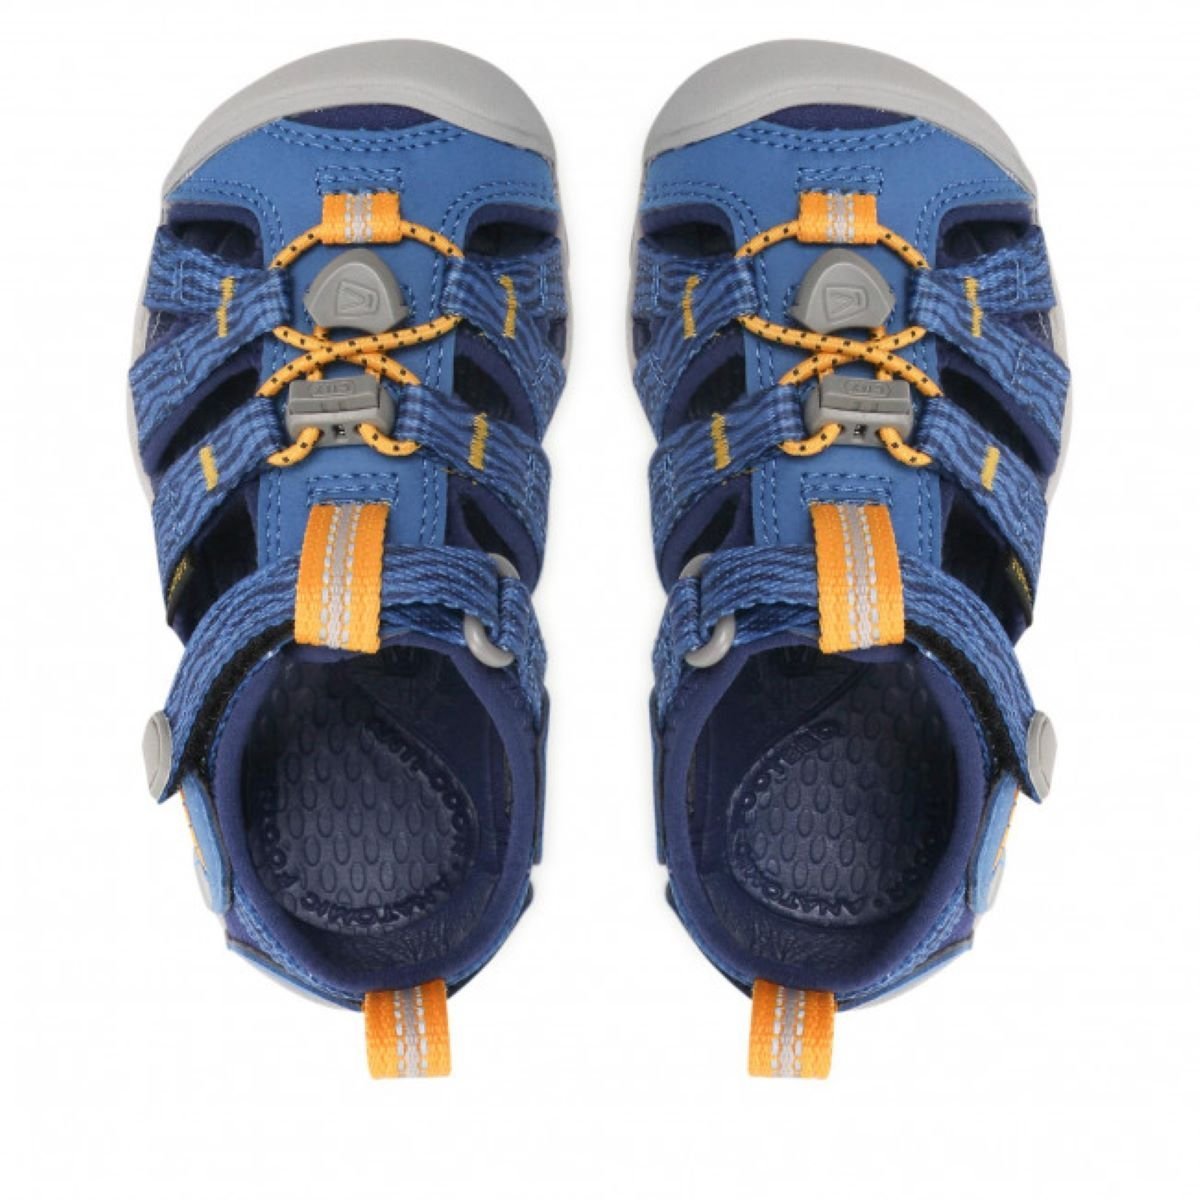 Взуття дитяче Keen Seacamp II CNX J - сине/помаранчеве